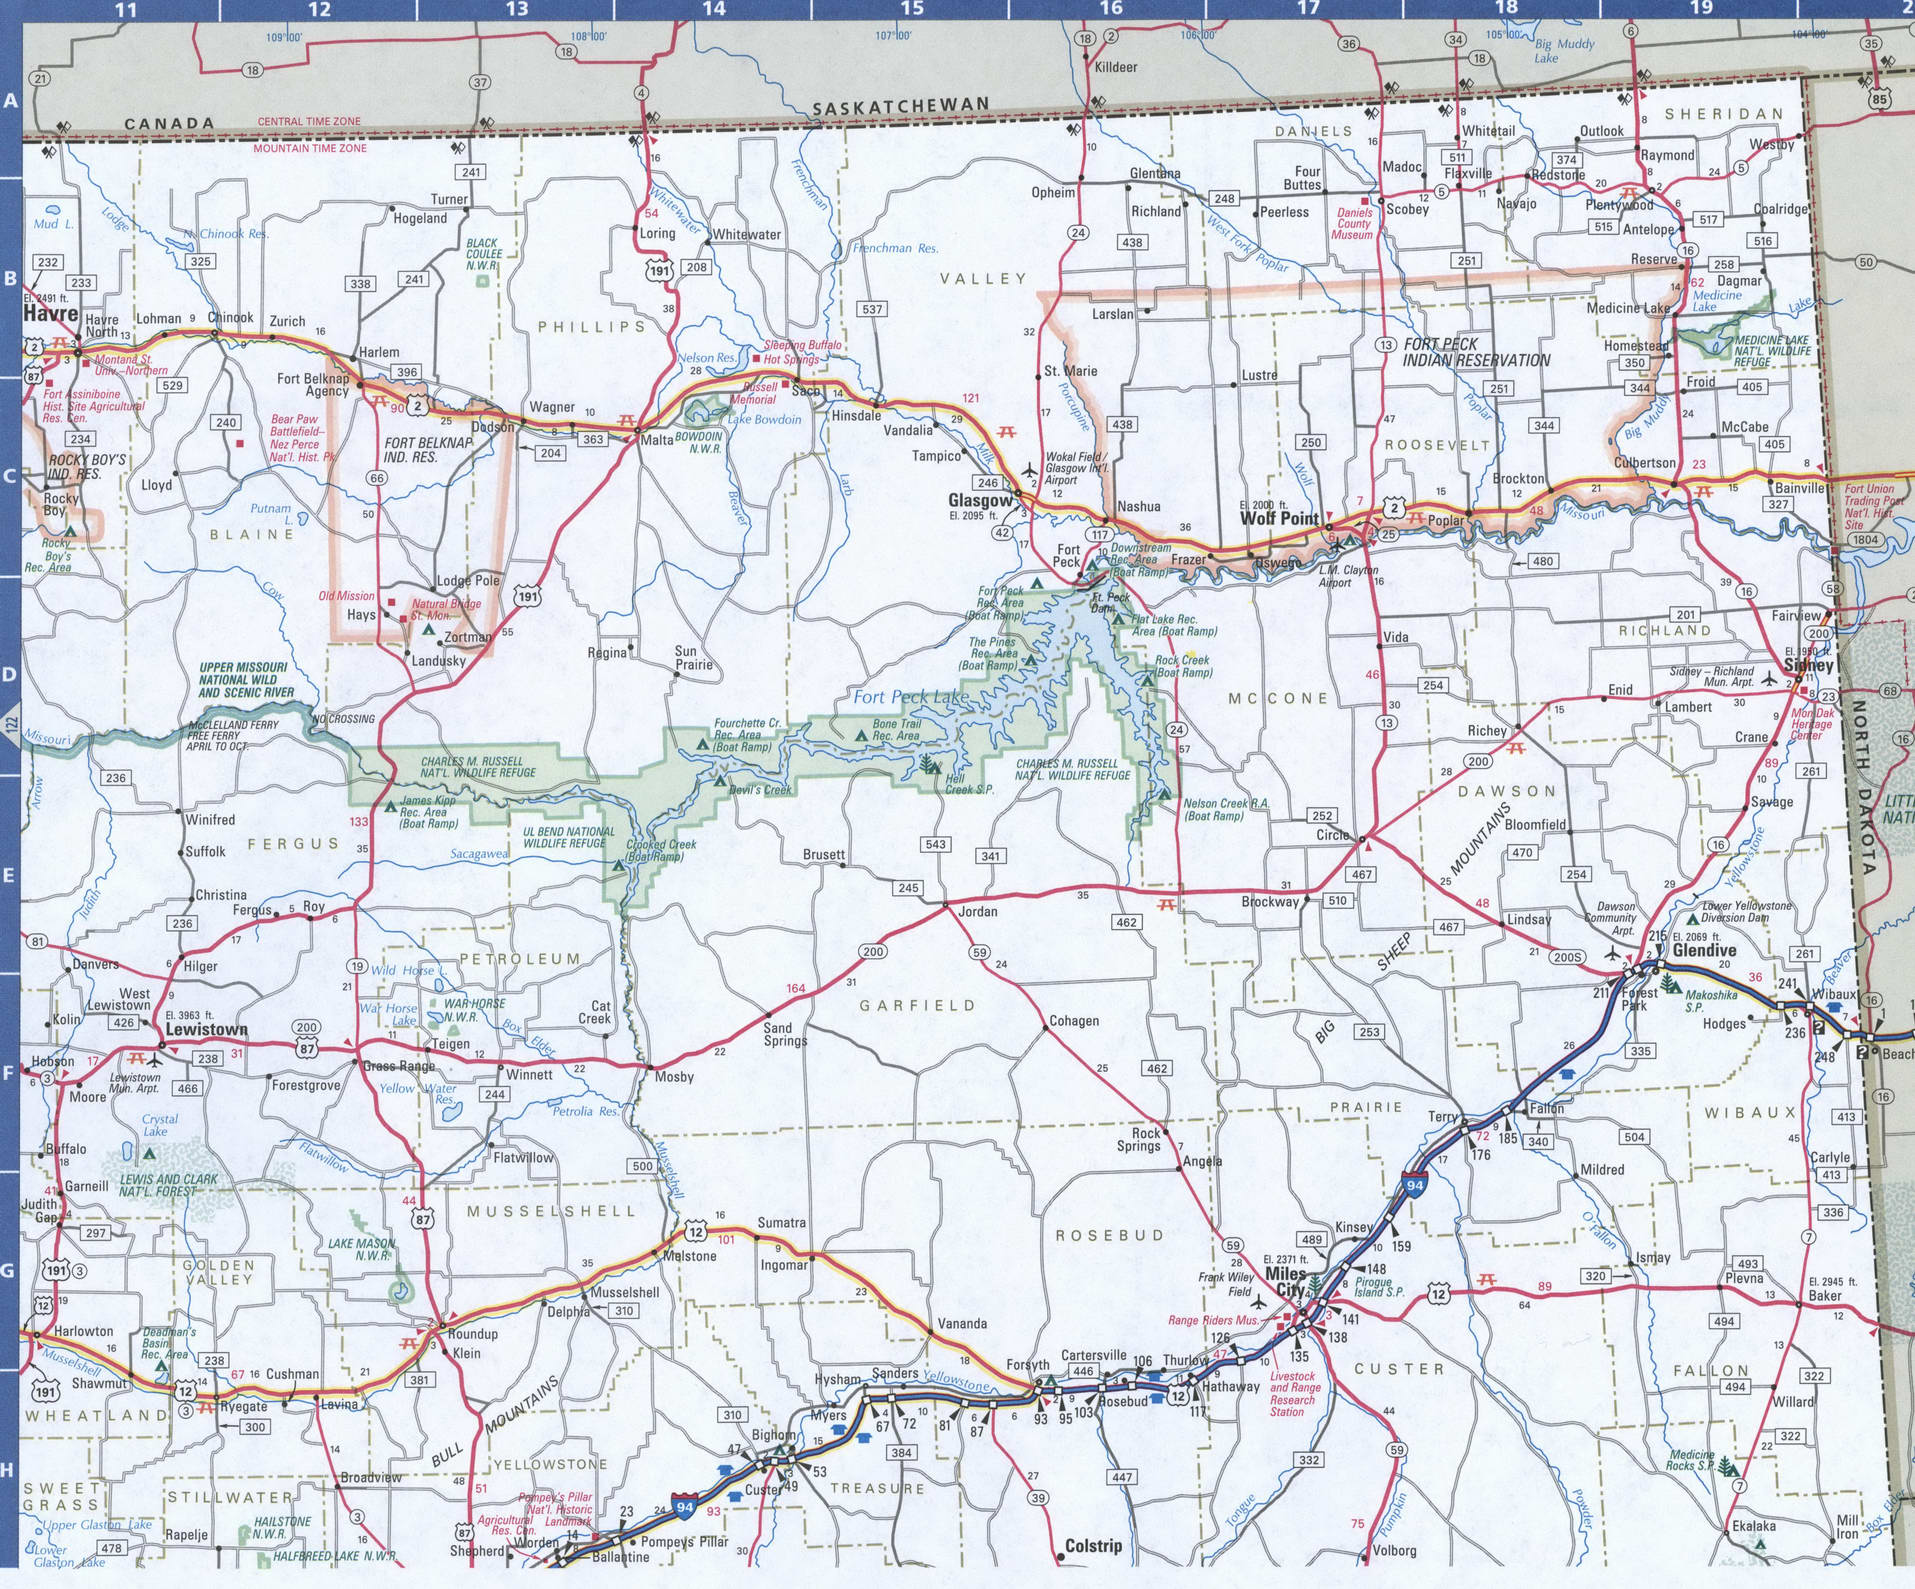 Montana NorthEast map